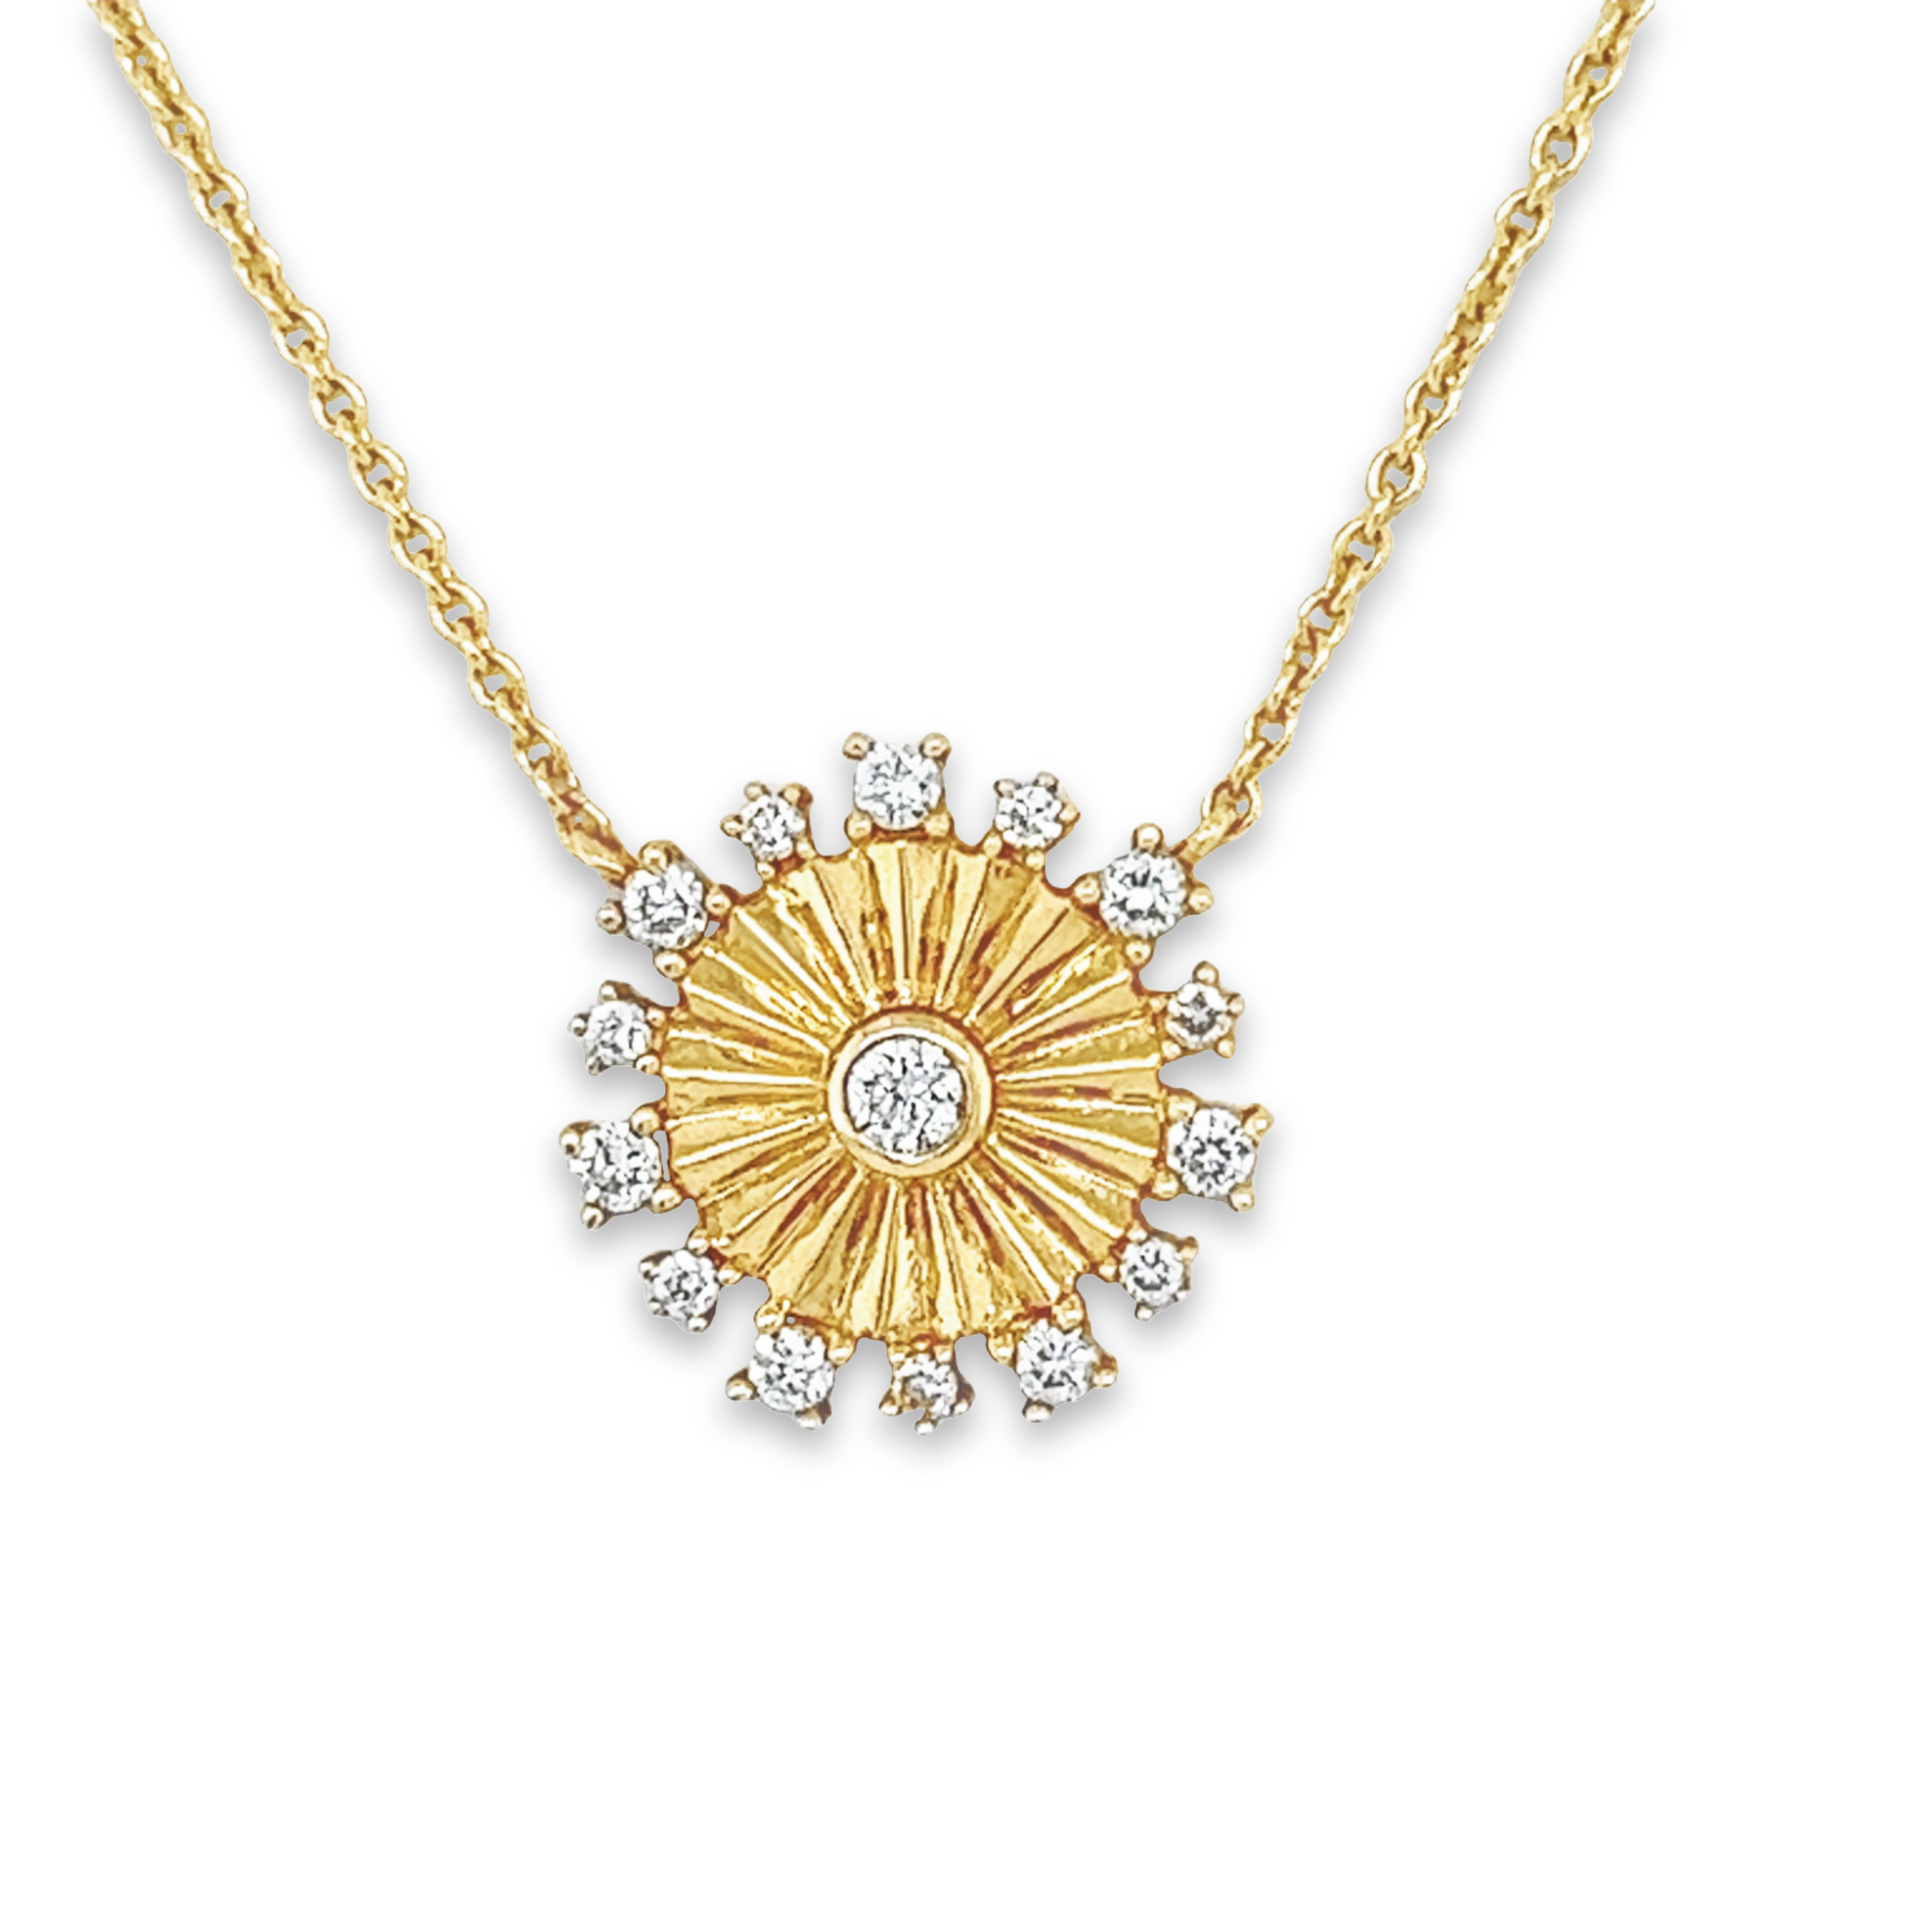 Featured image for “Diamond Embellished Mini Starburst”